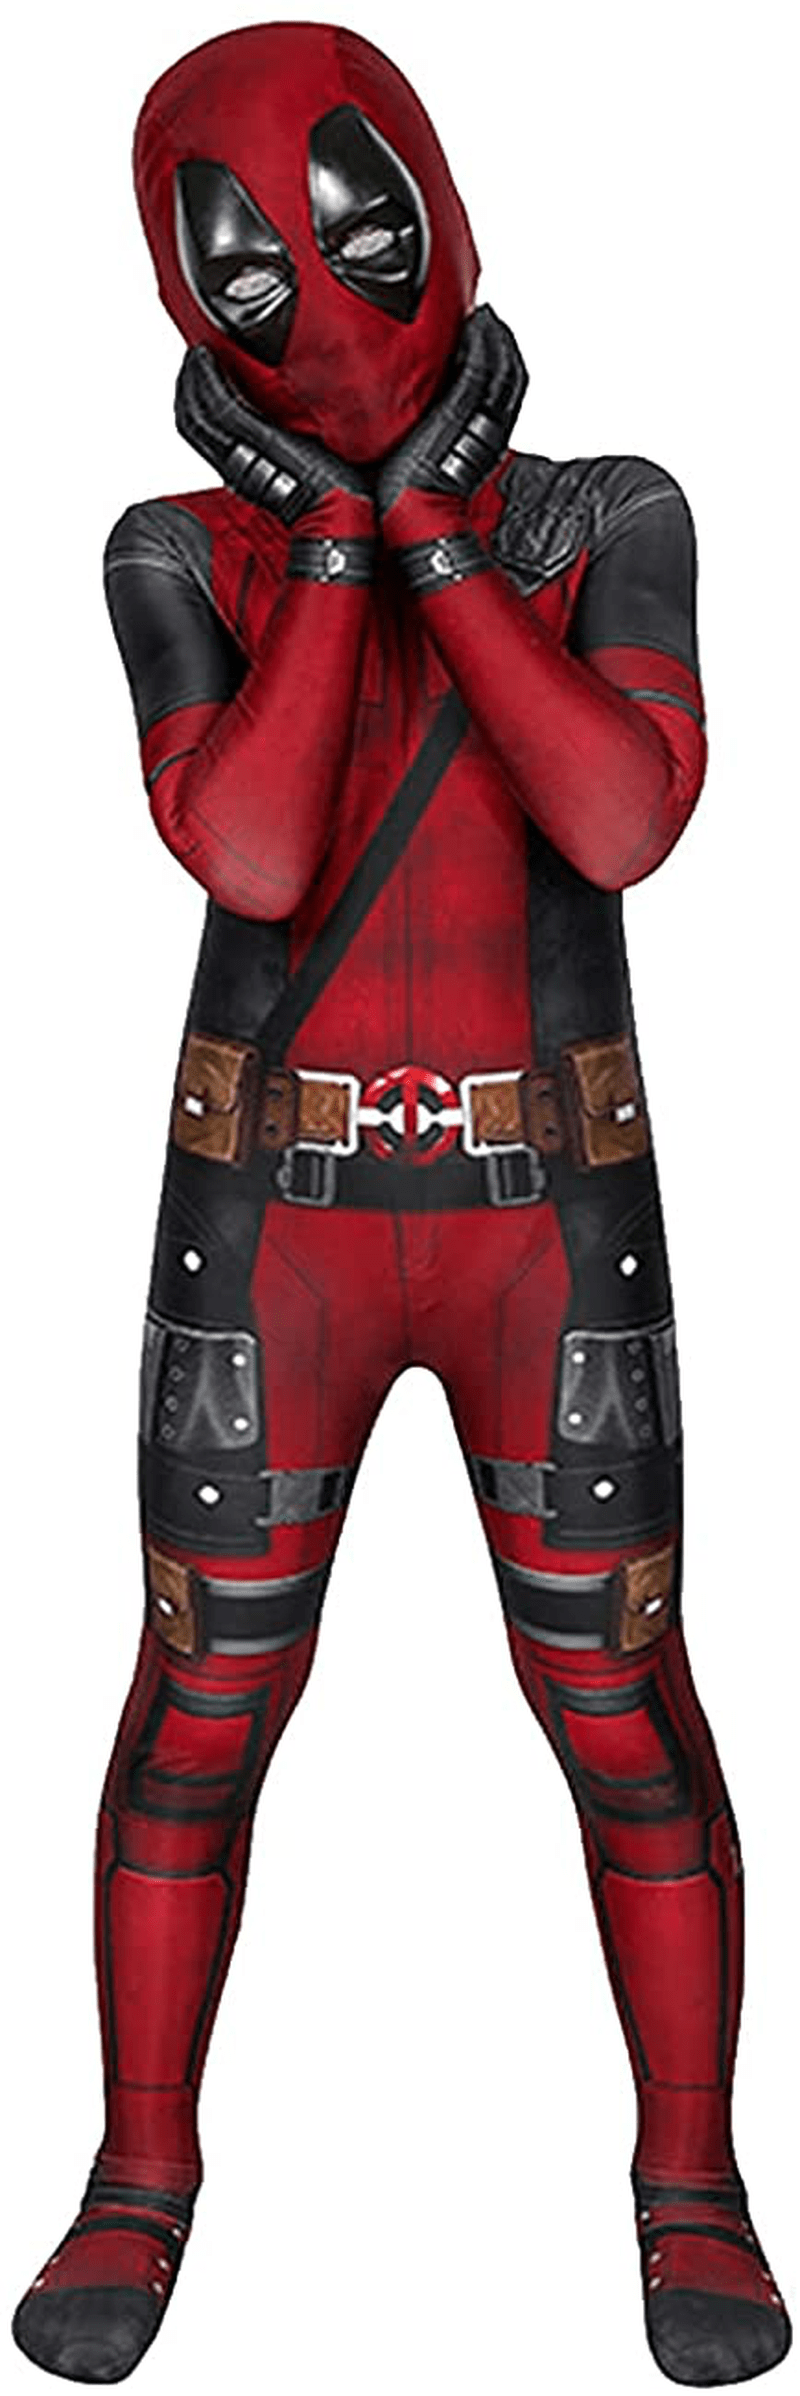 ugoccam Superhero Kids Bodysuit 3D Style Halloween Cosplay Costumes Apparel & Accessories > Costumes & Accessories > Costumes ugoccam Red/Black Kids-XS(Height:37-42Inch) 